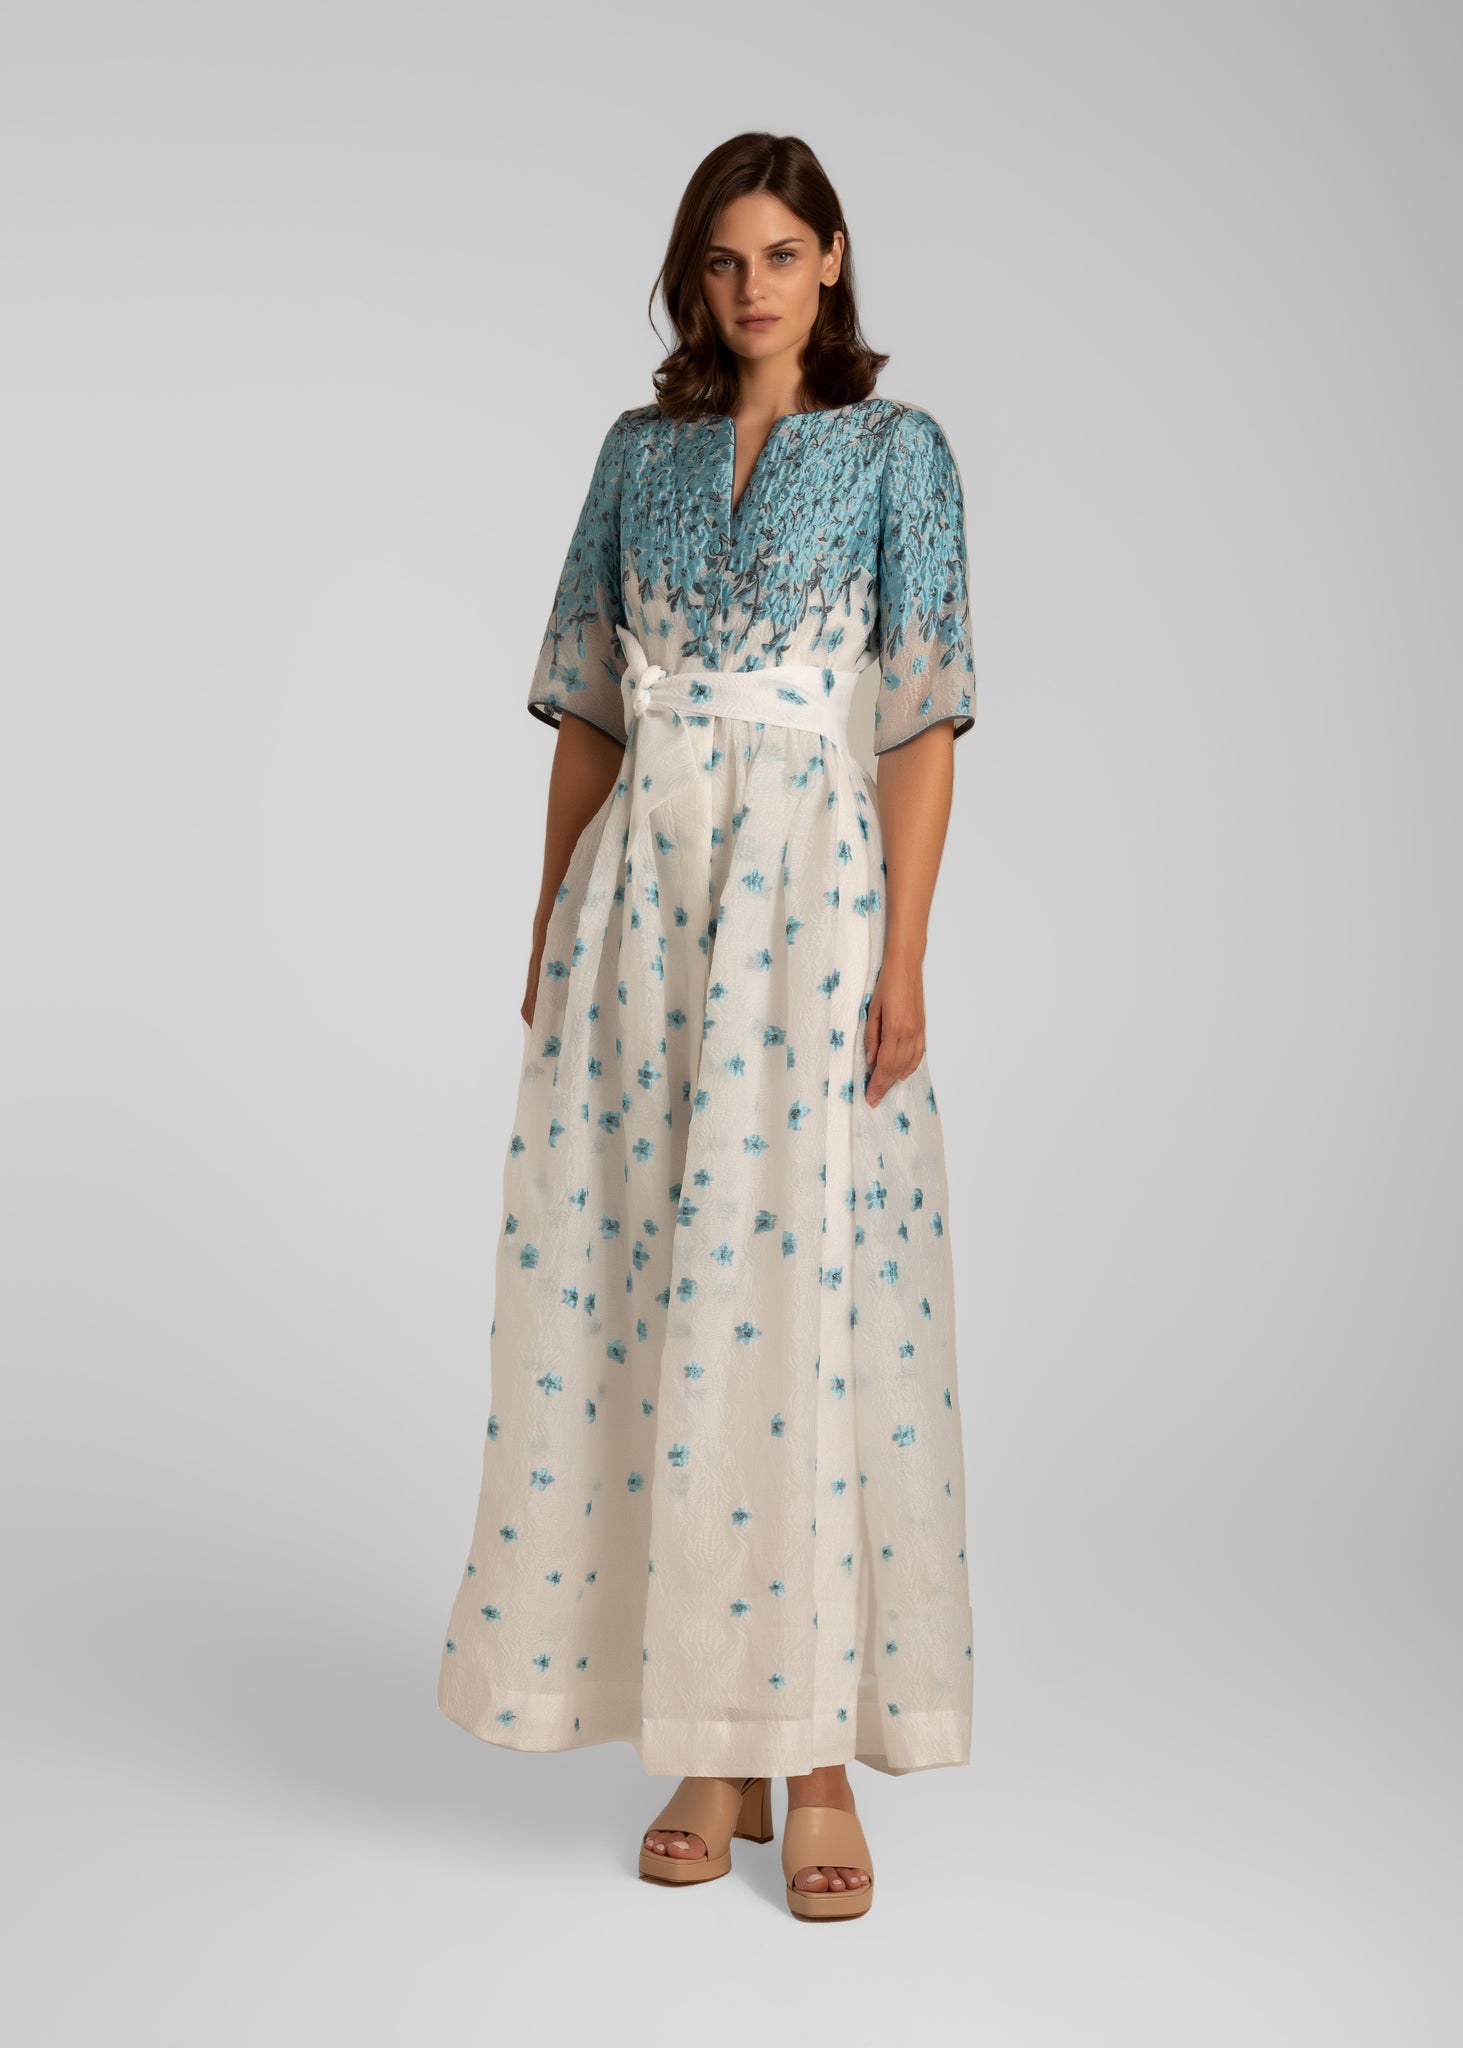 Baruni Petunia Dress,Baruni Apparel - Shopidpearl